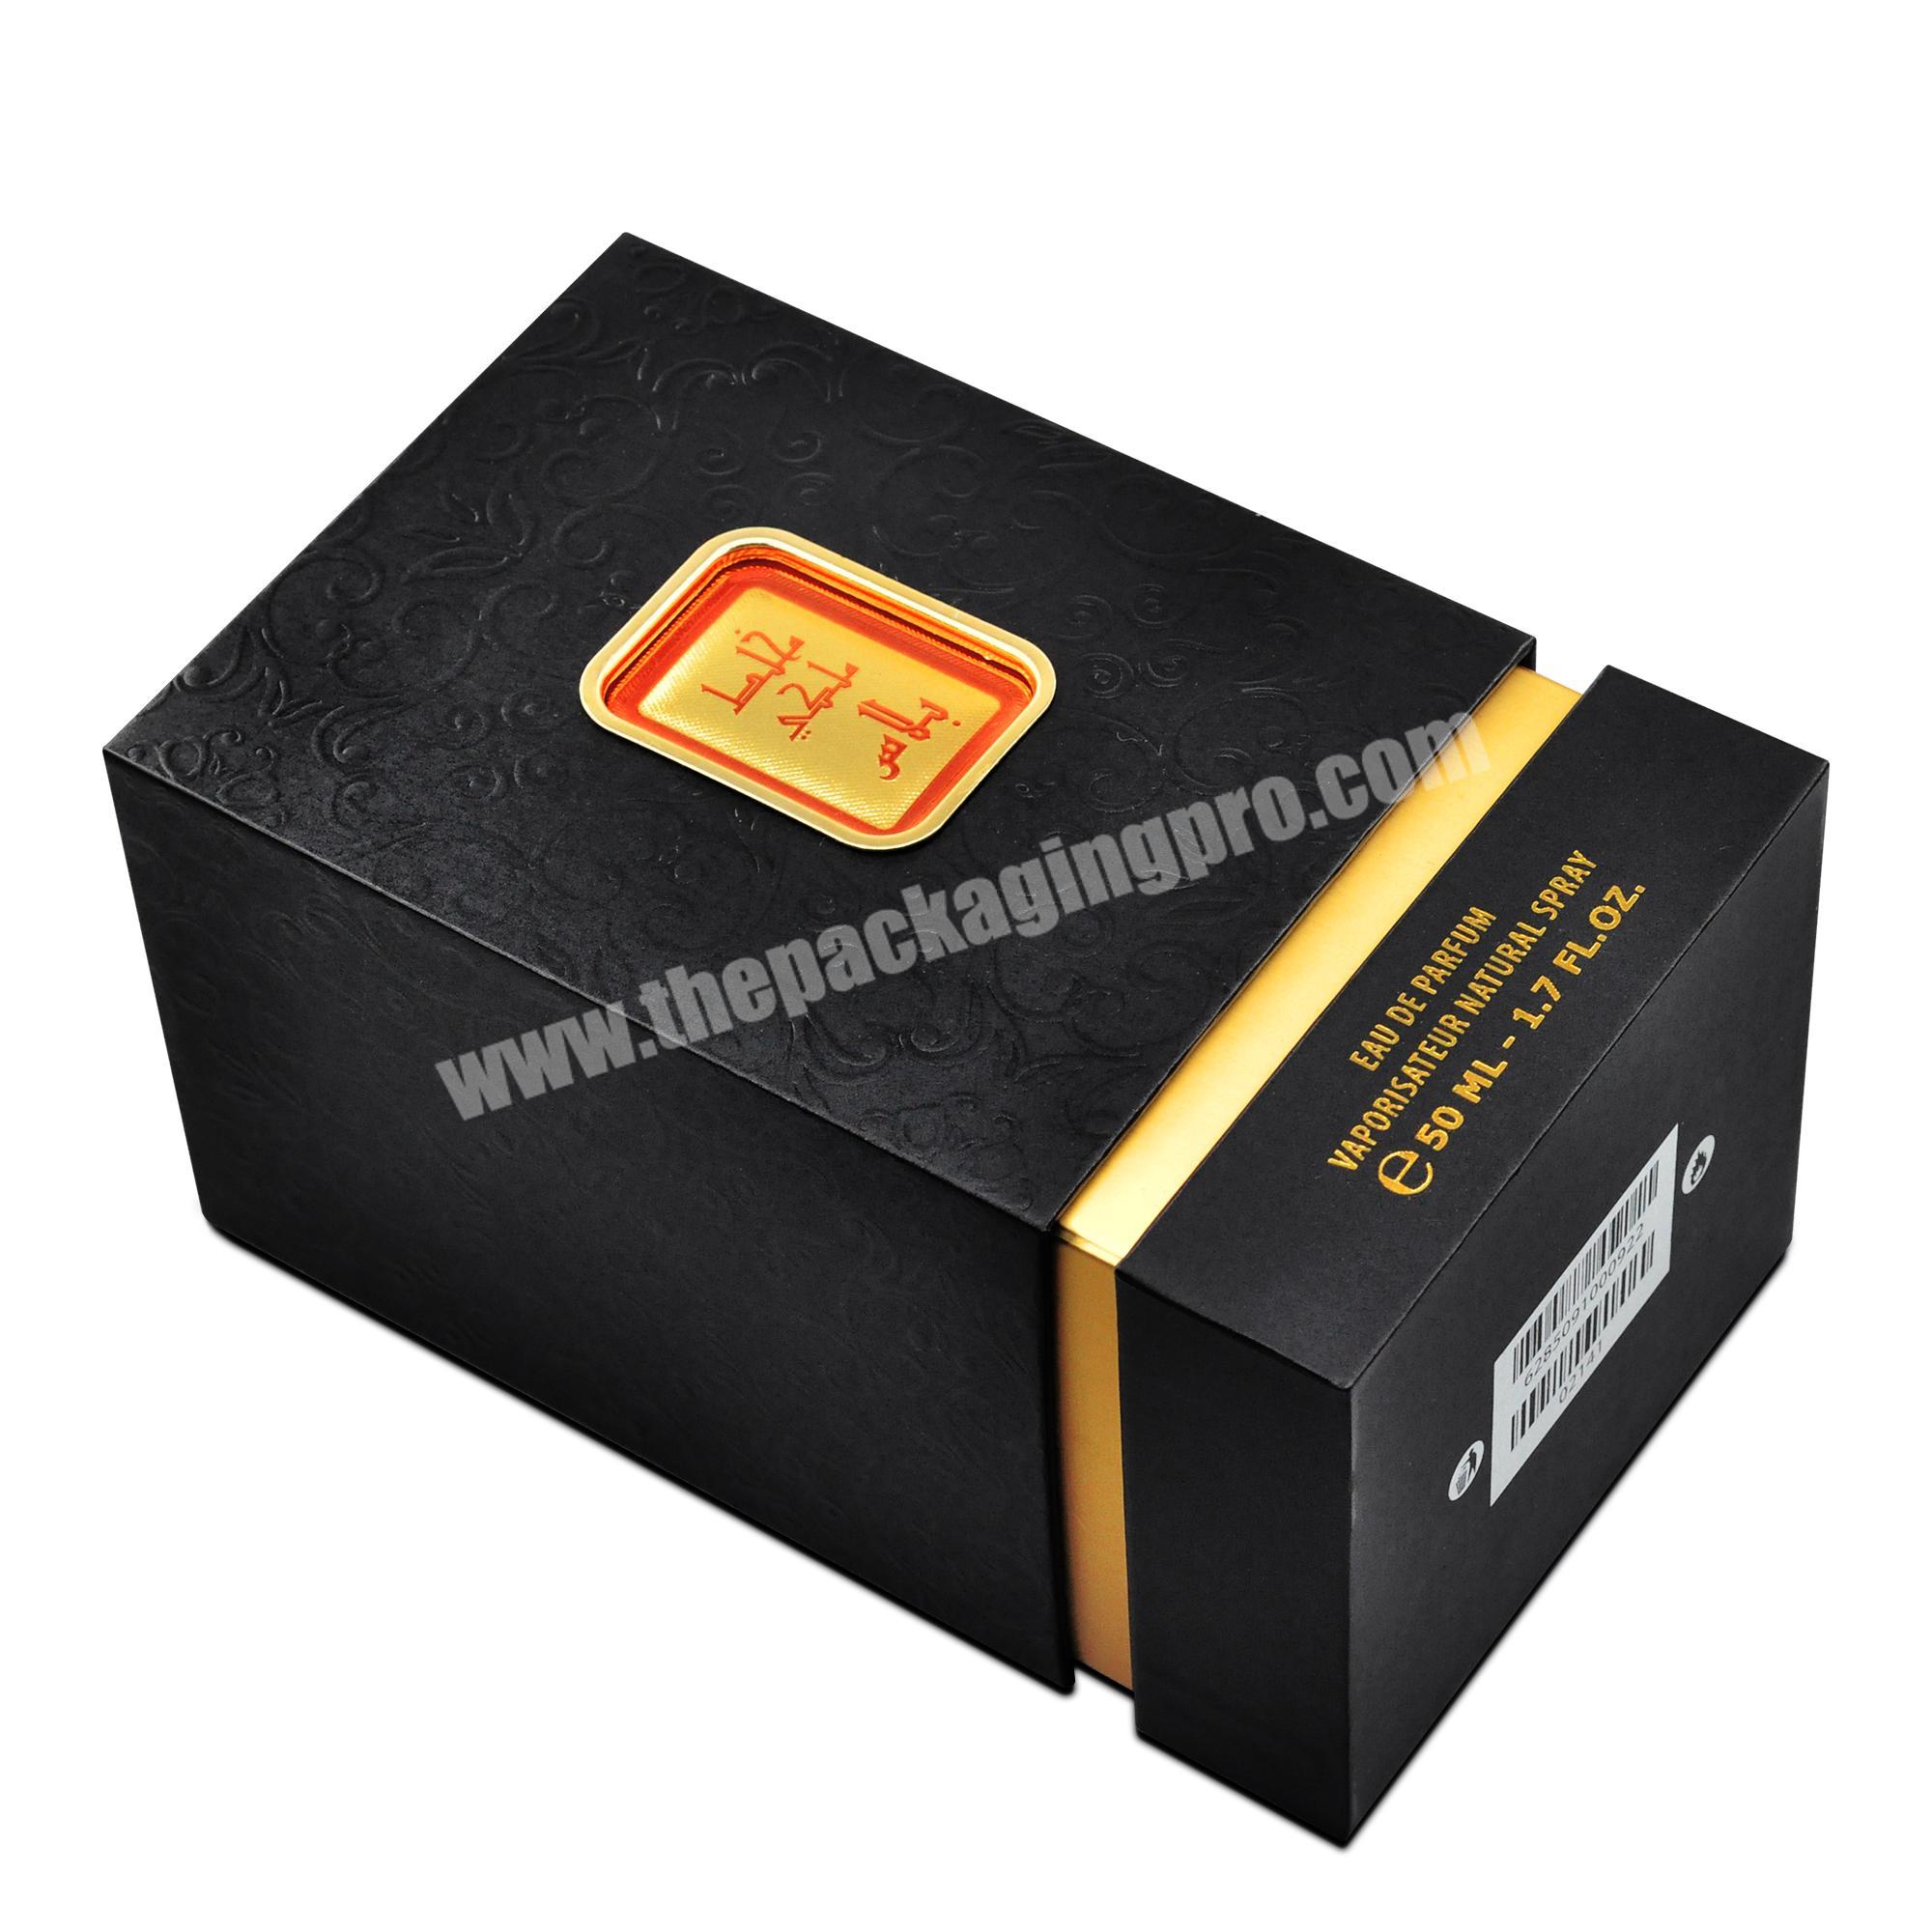 Wholesale Rigid Paper Exquisite Workmanship Small glass perfume box custom logo golden and black box